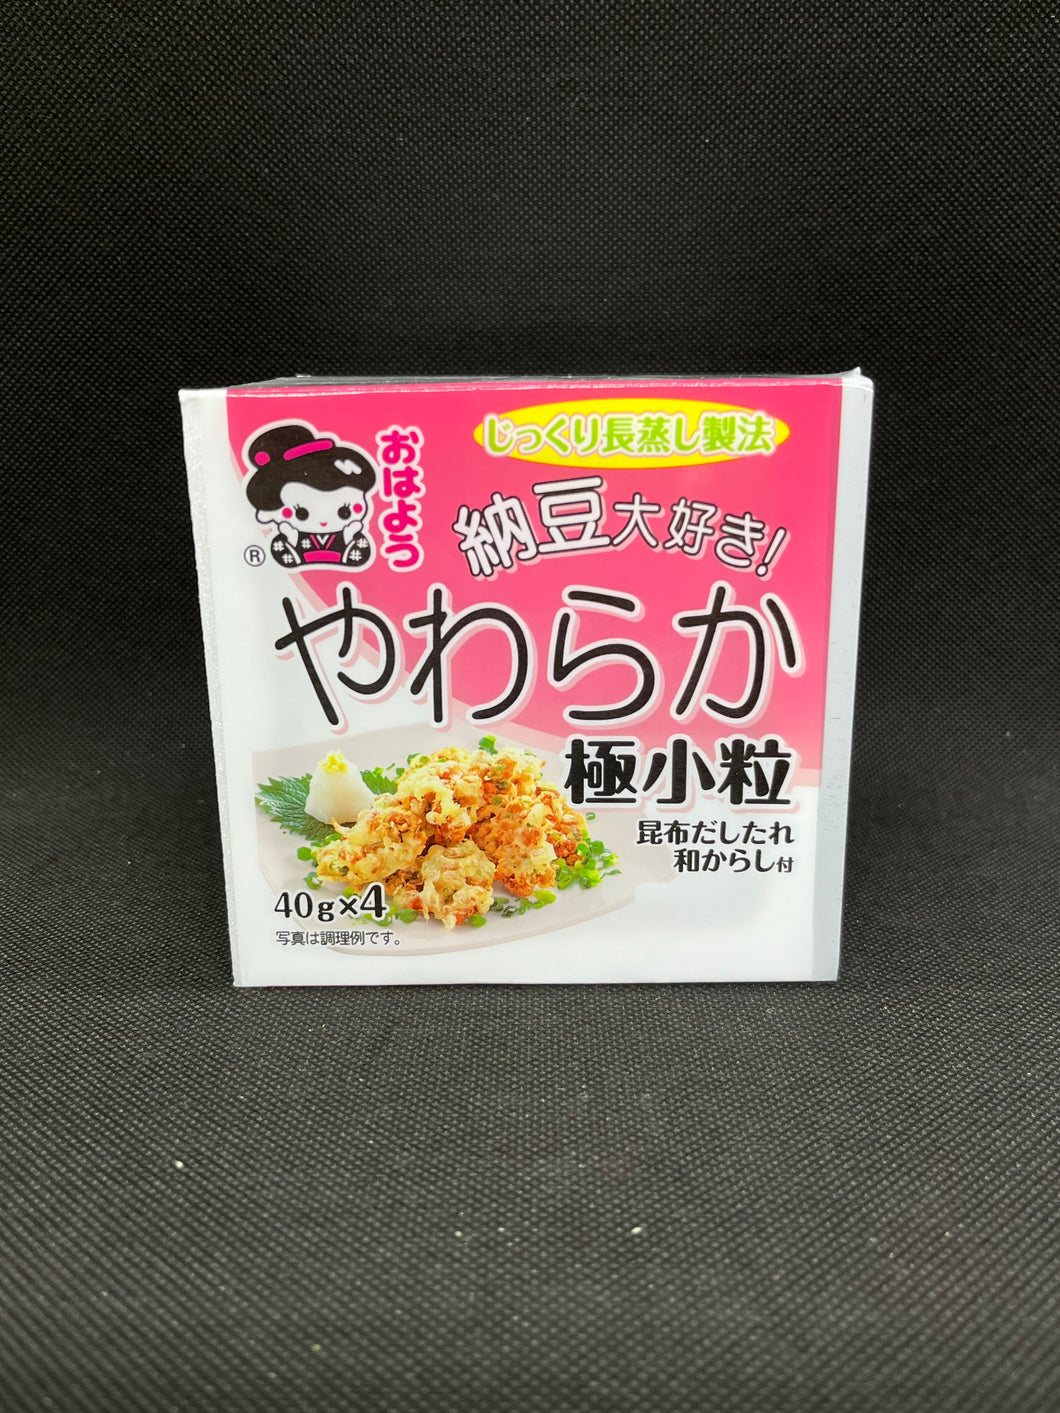 Yamada Natto Daisuki Natto (40g x 4 servings)